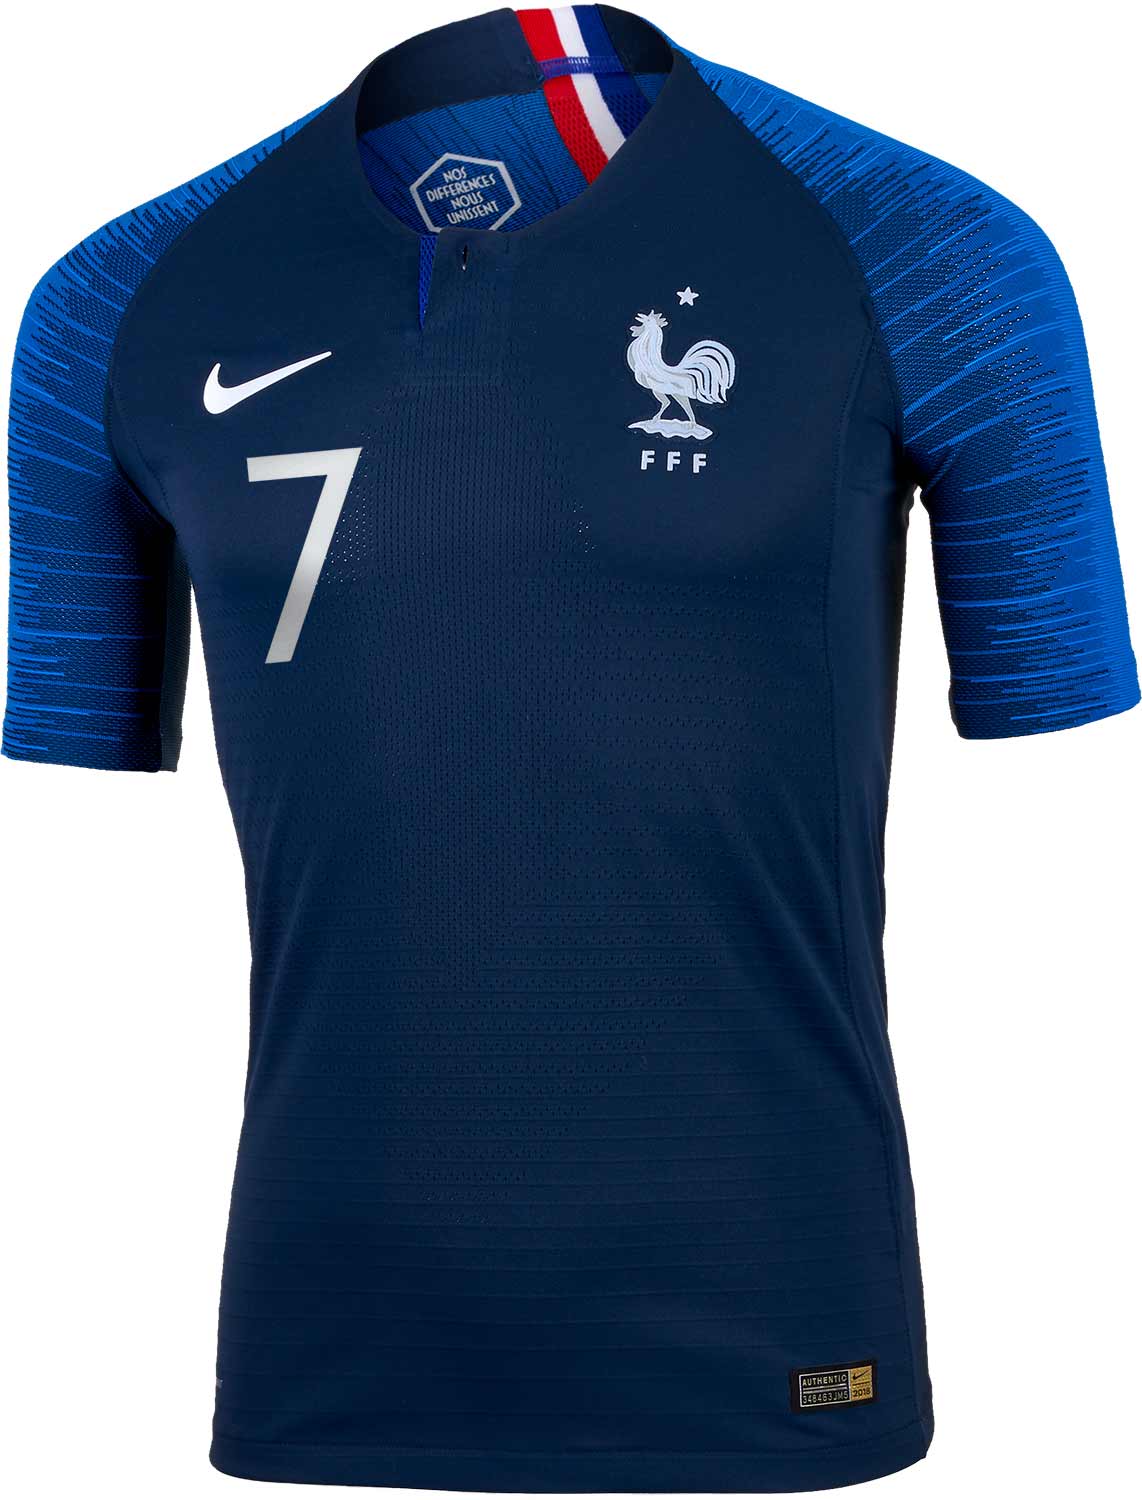 2018/19 Nike Antoine Griezmann France Home Match Jersey - SoccerPro